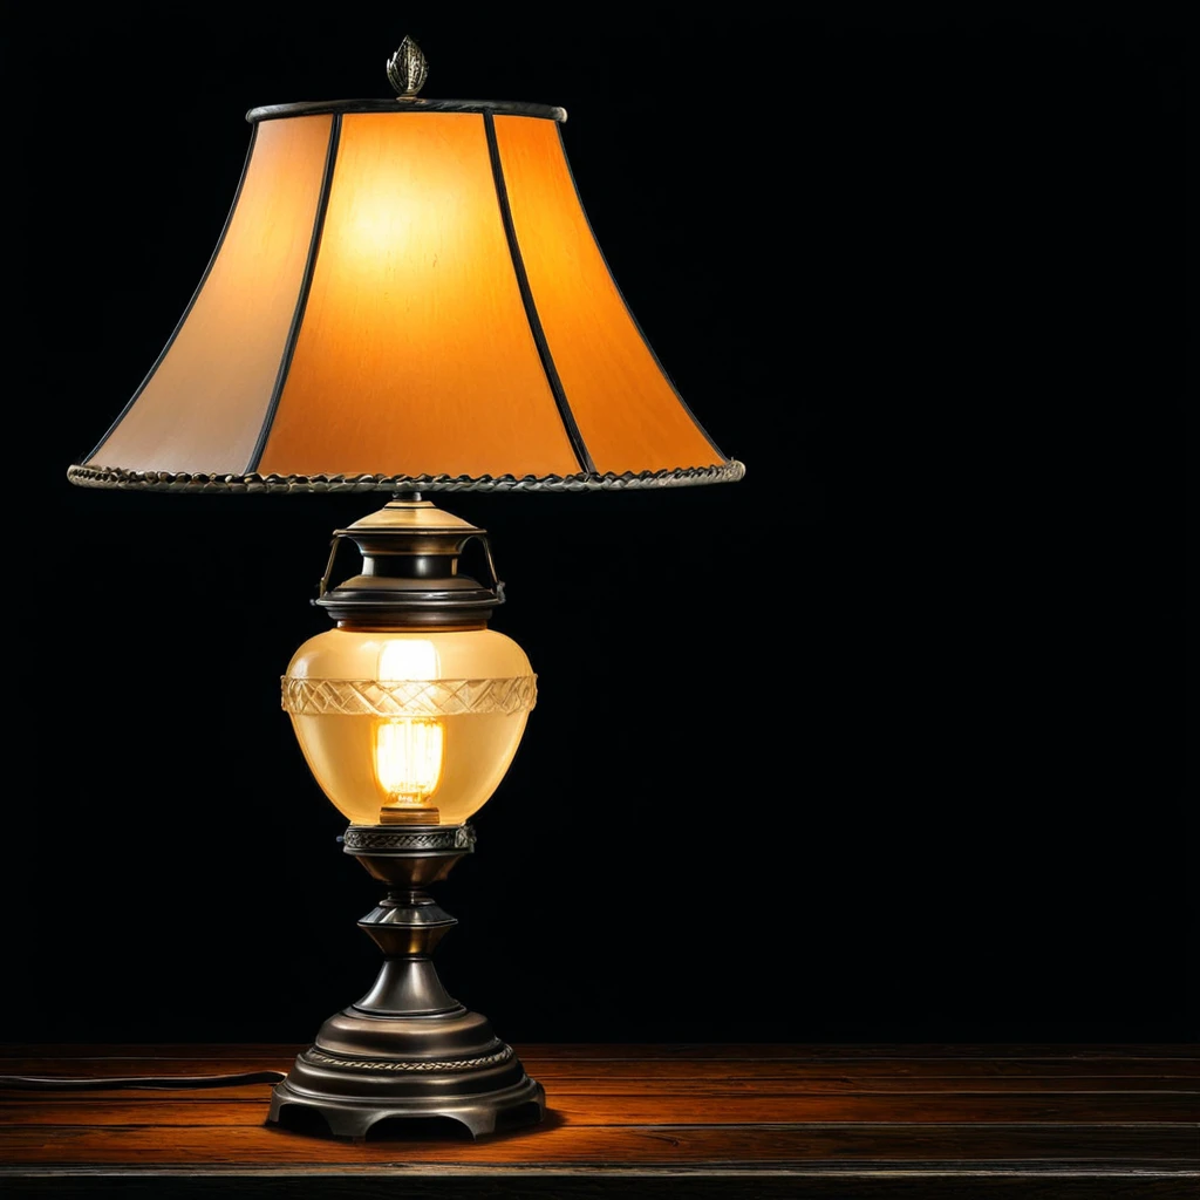 (lamp showcase) <lora:29_lamp_showcase:1.1>
Black background,
high quality, professional, highres, amazing, dramatic,
(Old...